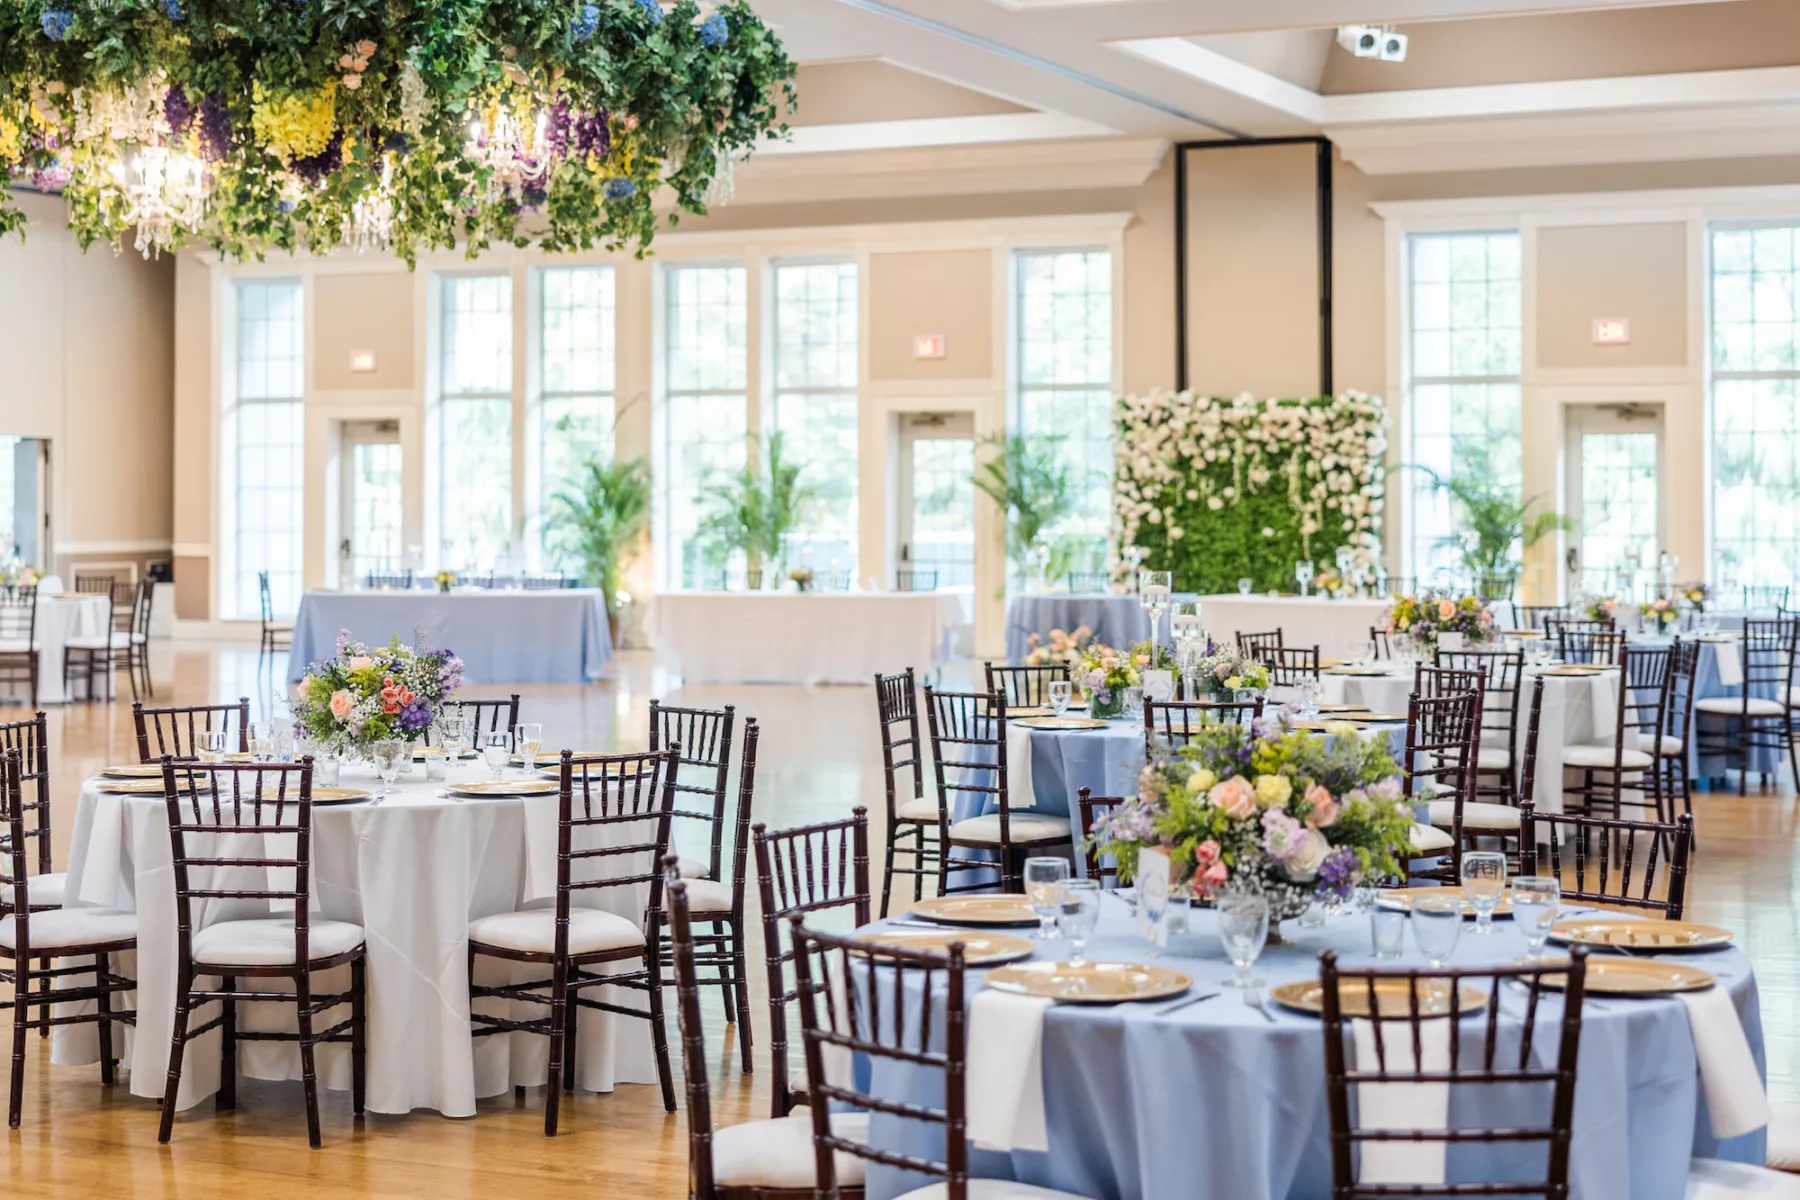 Blue and Peach English Garden Inspired Ballroom Wedding Reception with Mahogany Chiavari Chairs Ideas